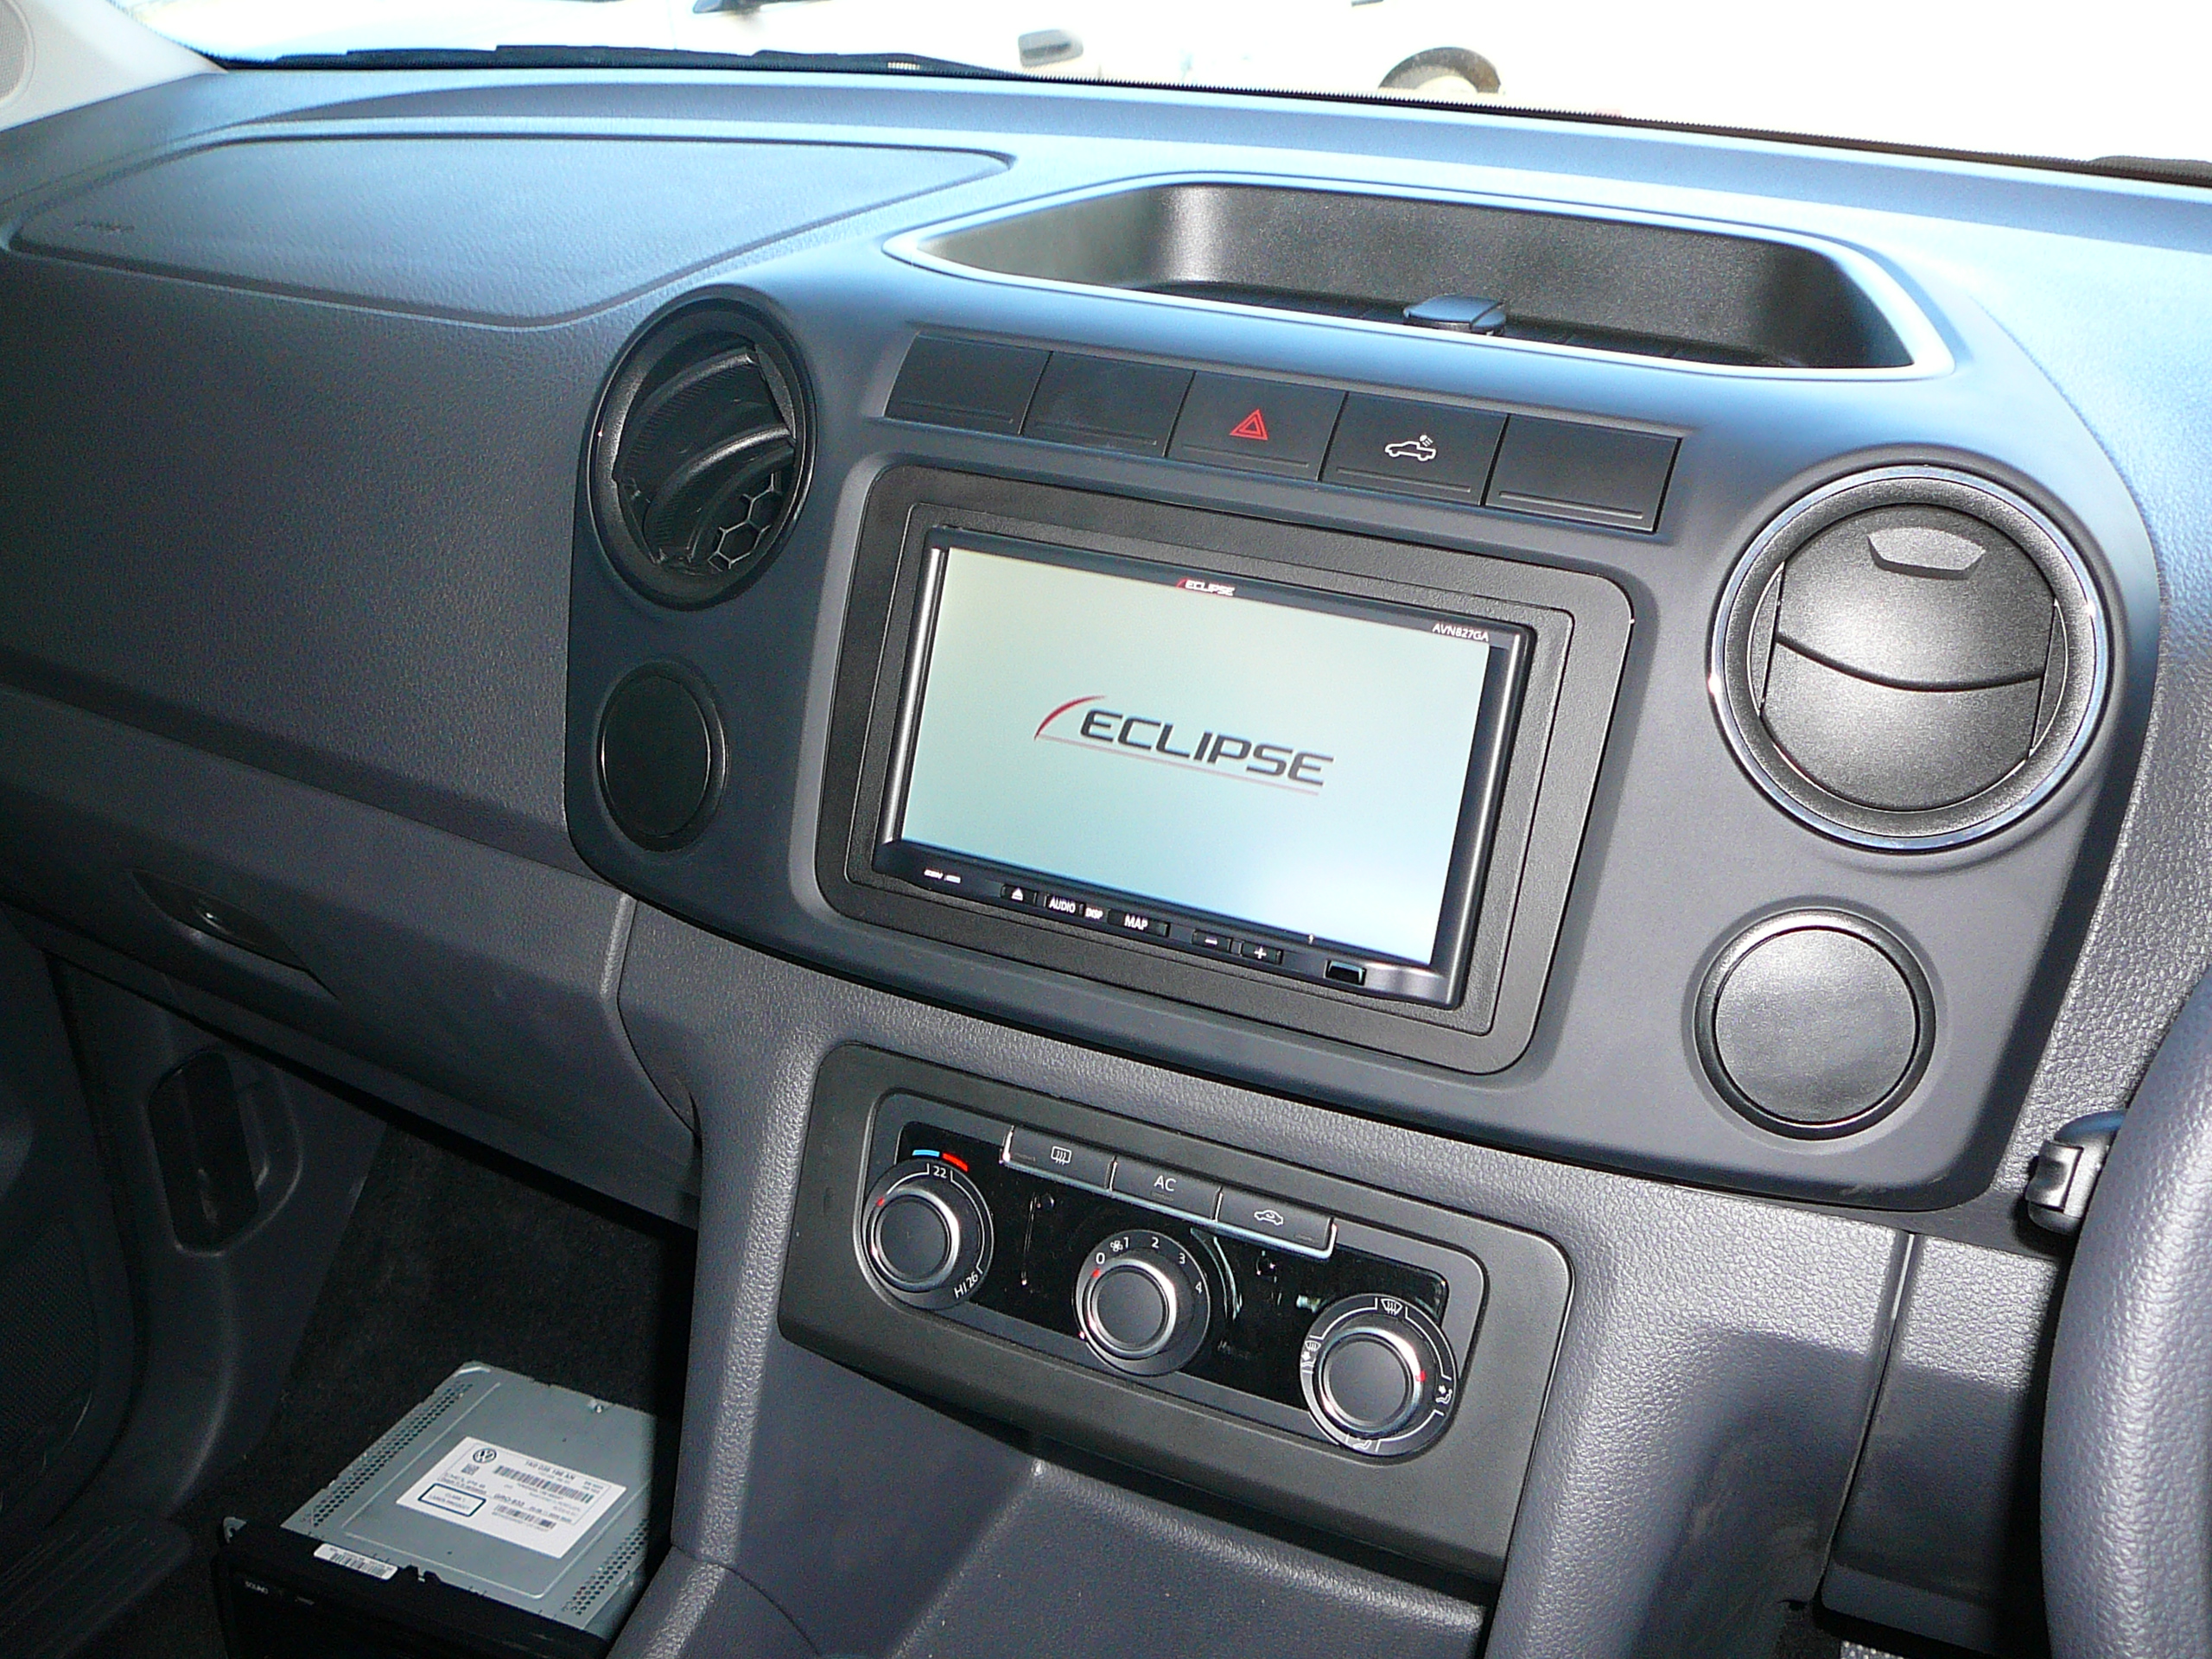 VW Amarok 2012, Eclipse GPS Navigation